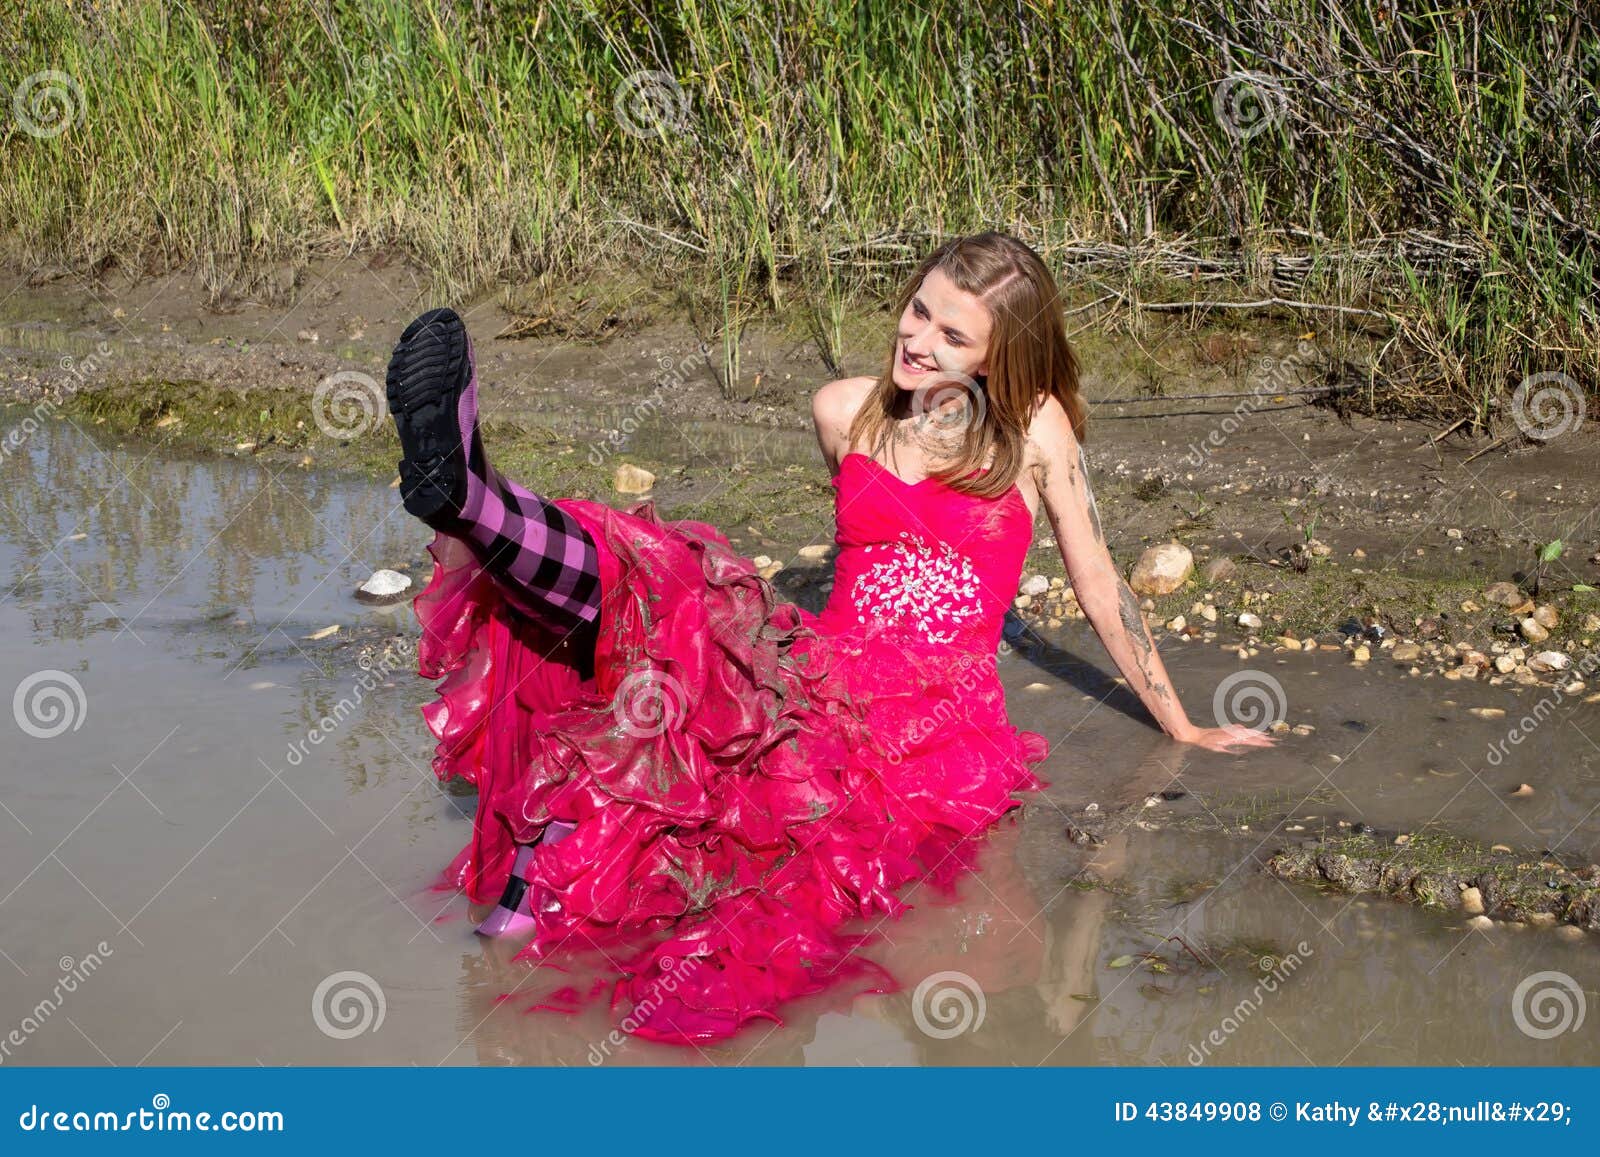 Wet Prom Dress